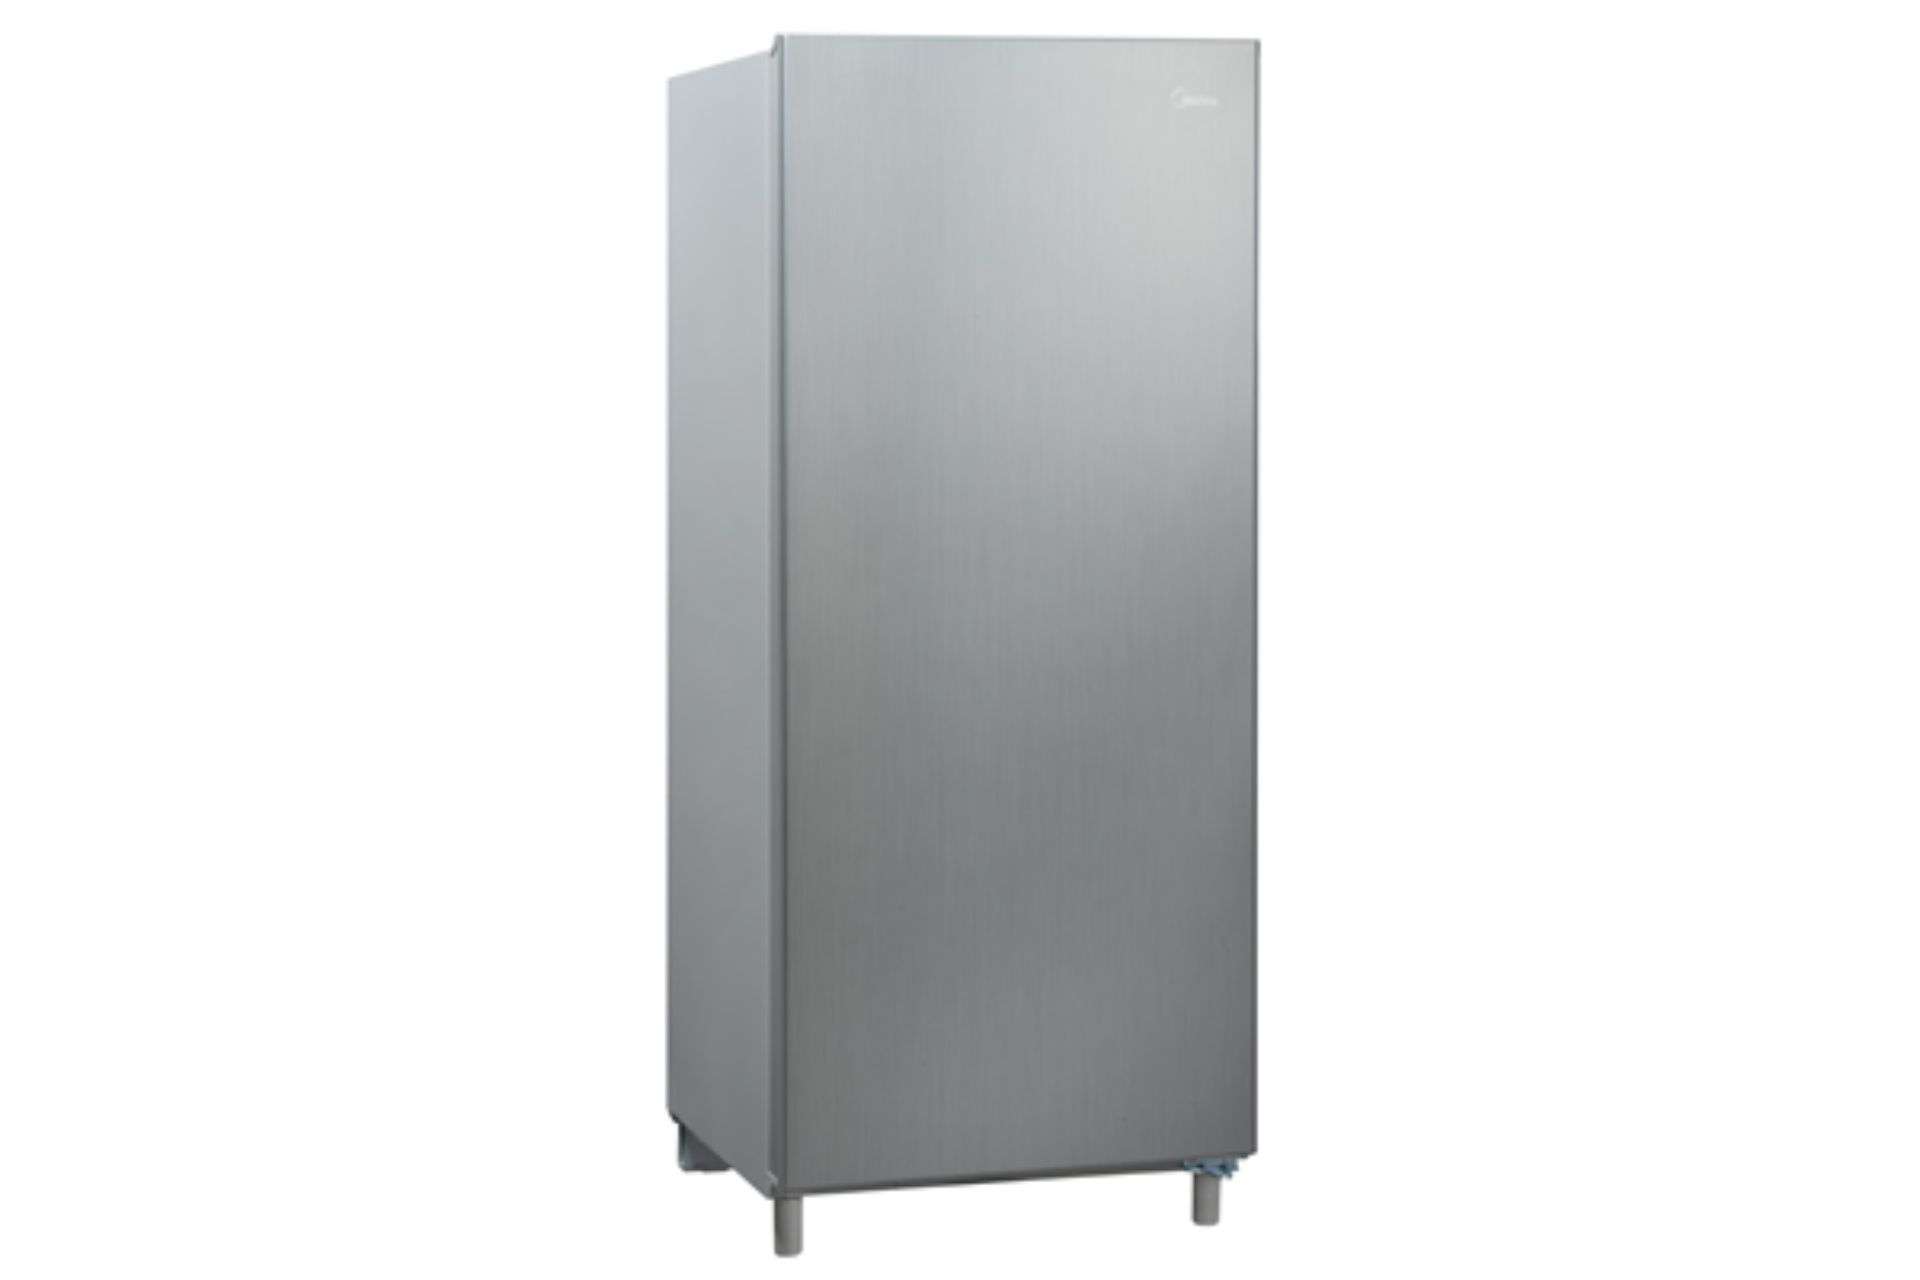 187L 1-Door Refrigerator